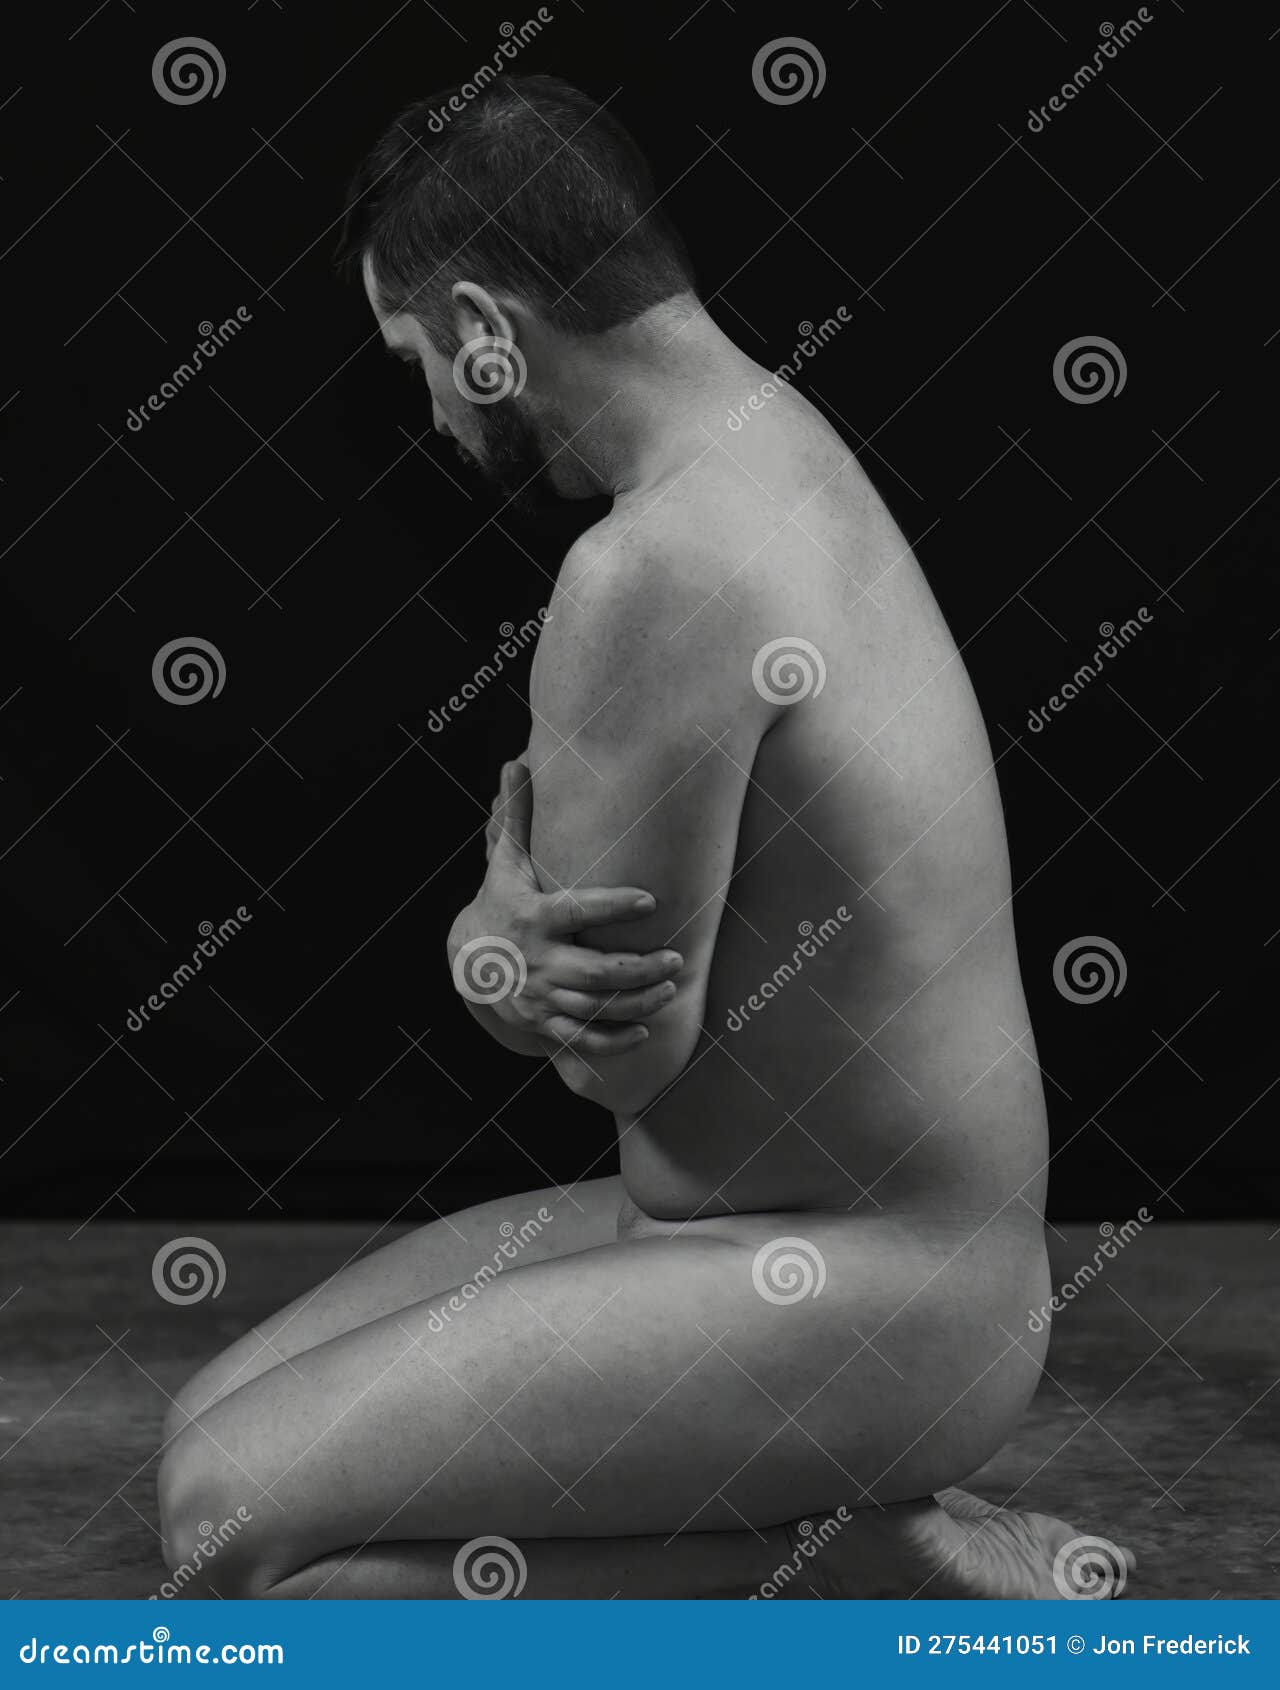 Male submissive kneeling